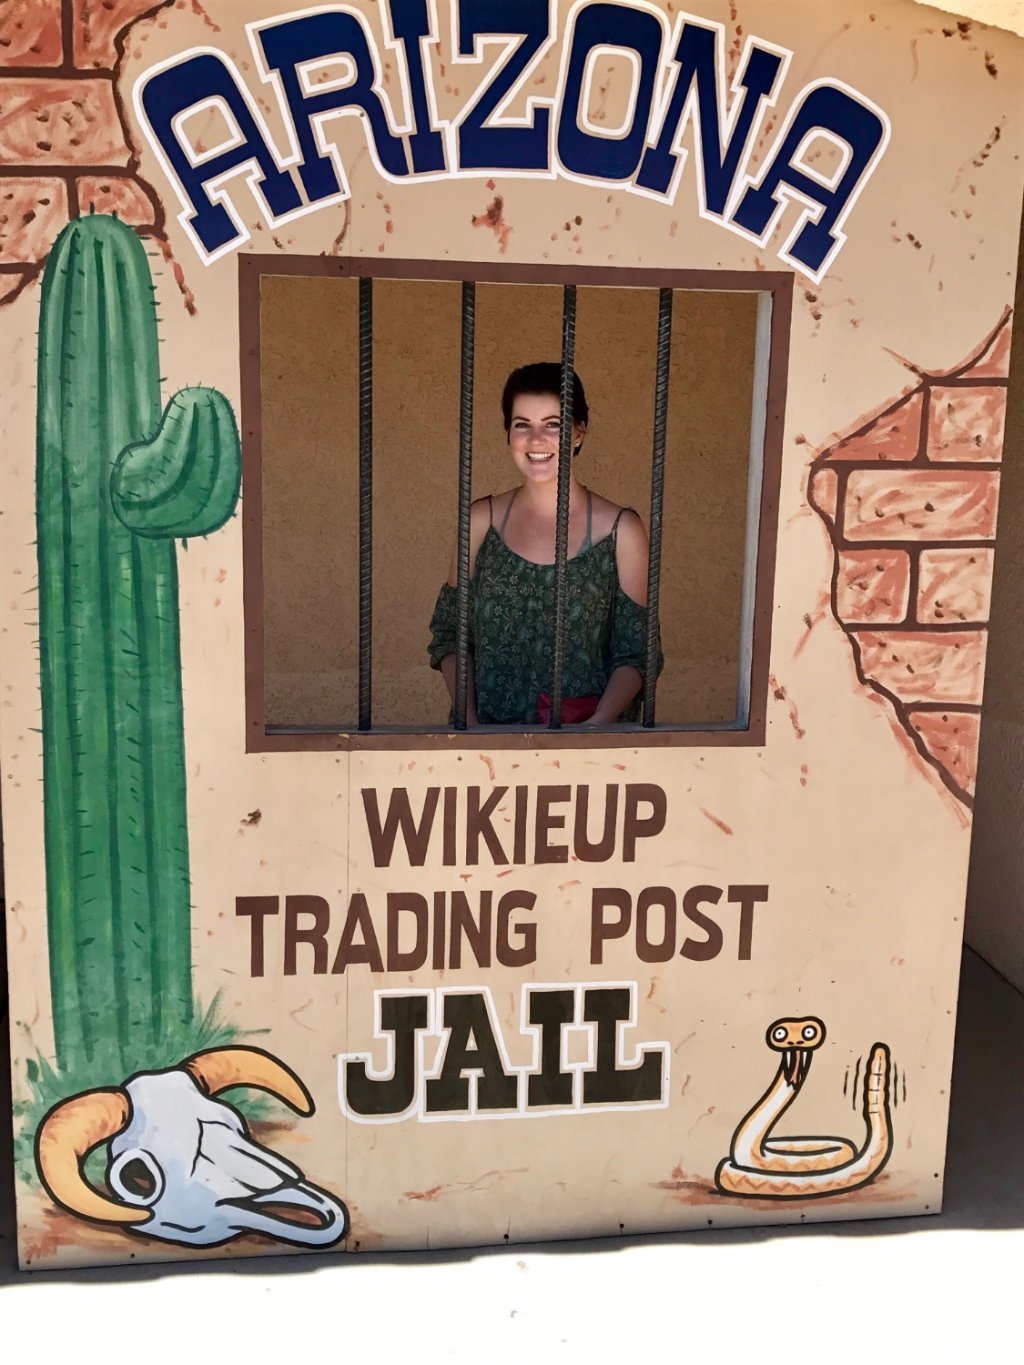 Wikieup Trading Post